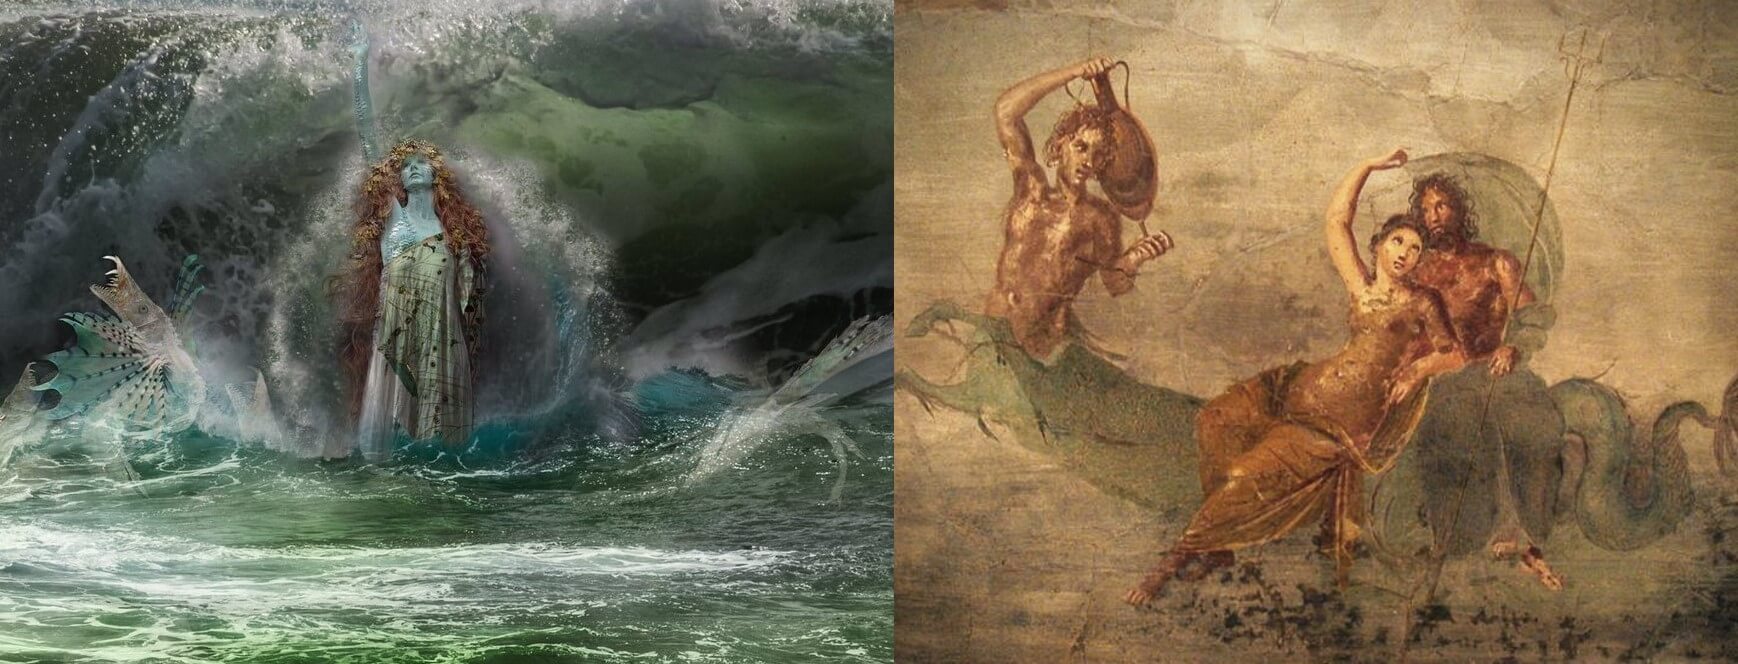 goddess salacia and neptune salty ocean